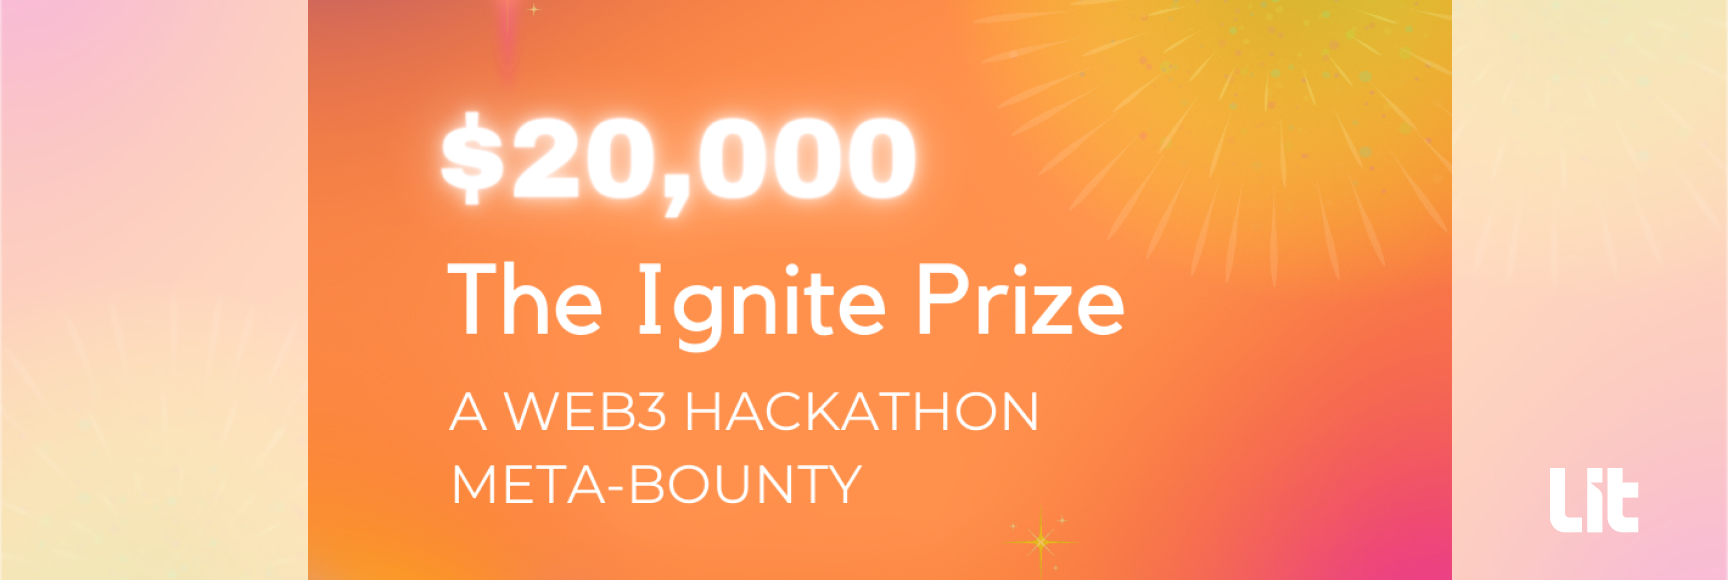 Introducing The Ignite Prize: A Web3 Hackathon Meta-Bounty